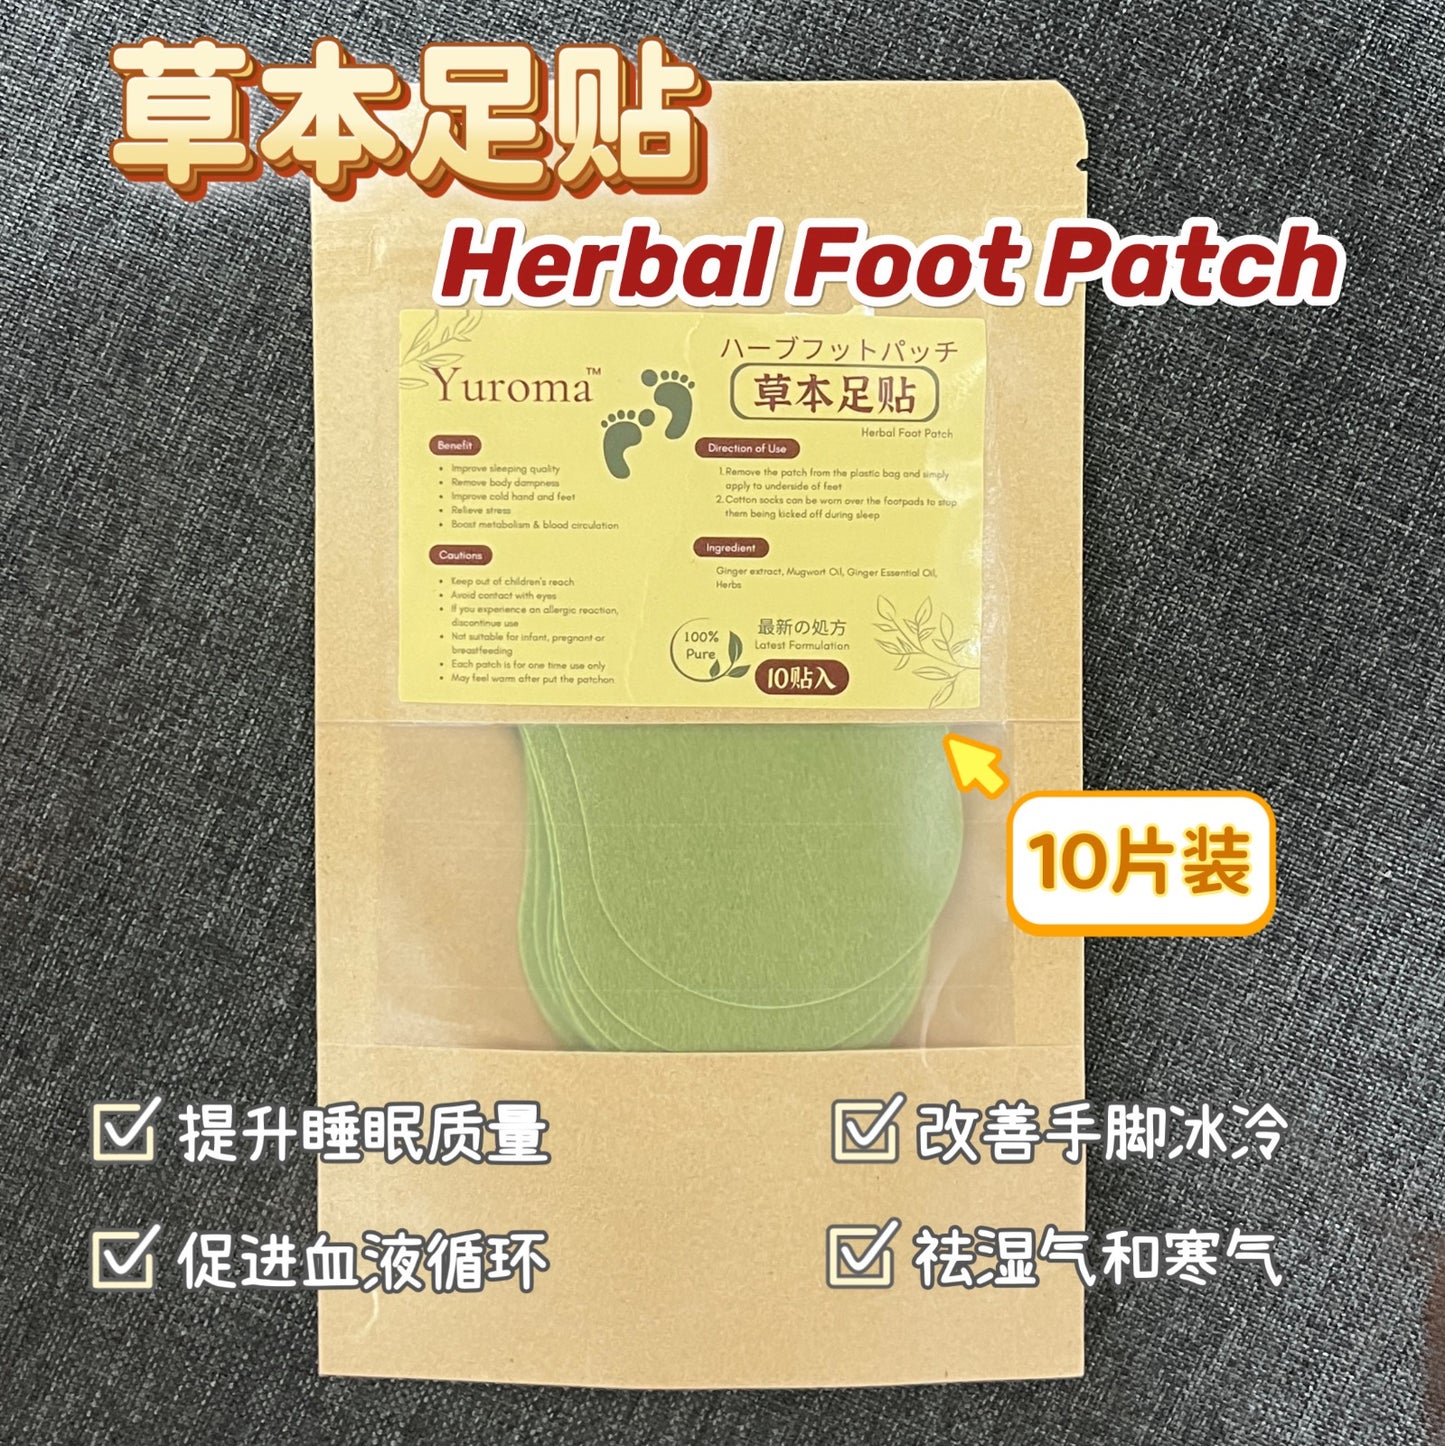 Yuroma Herbal Foot Patch 10 pcs 草本足贴10贴